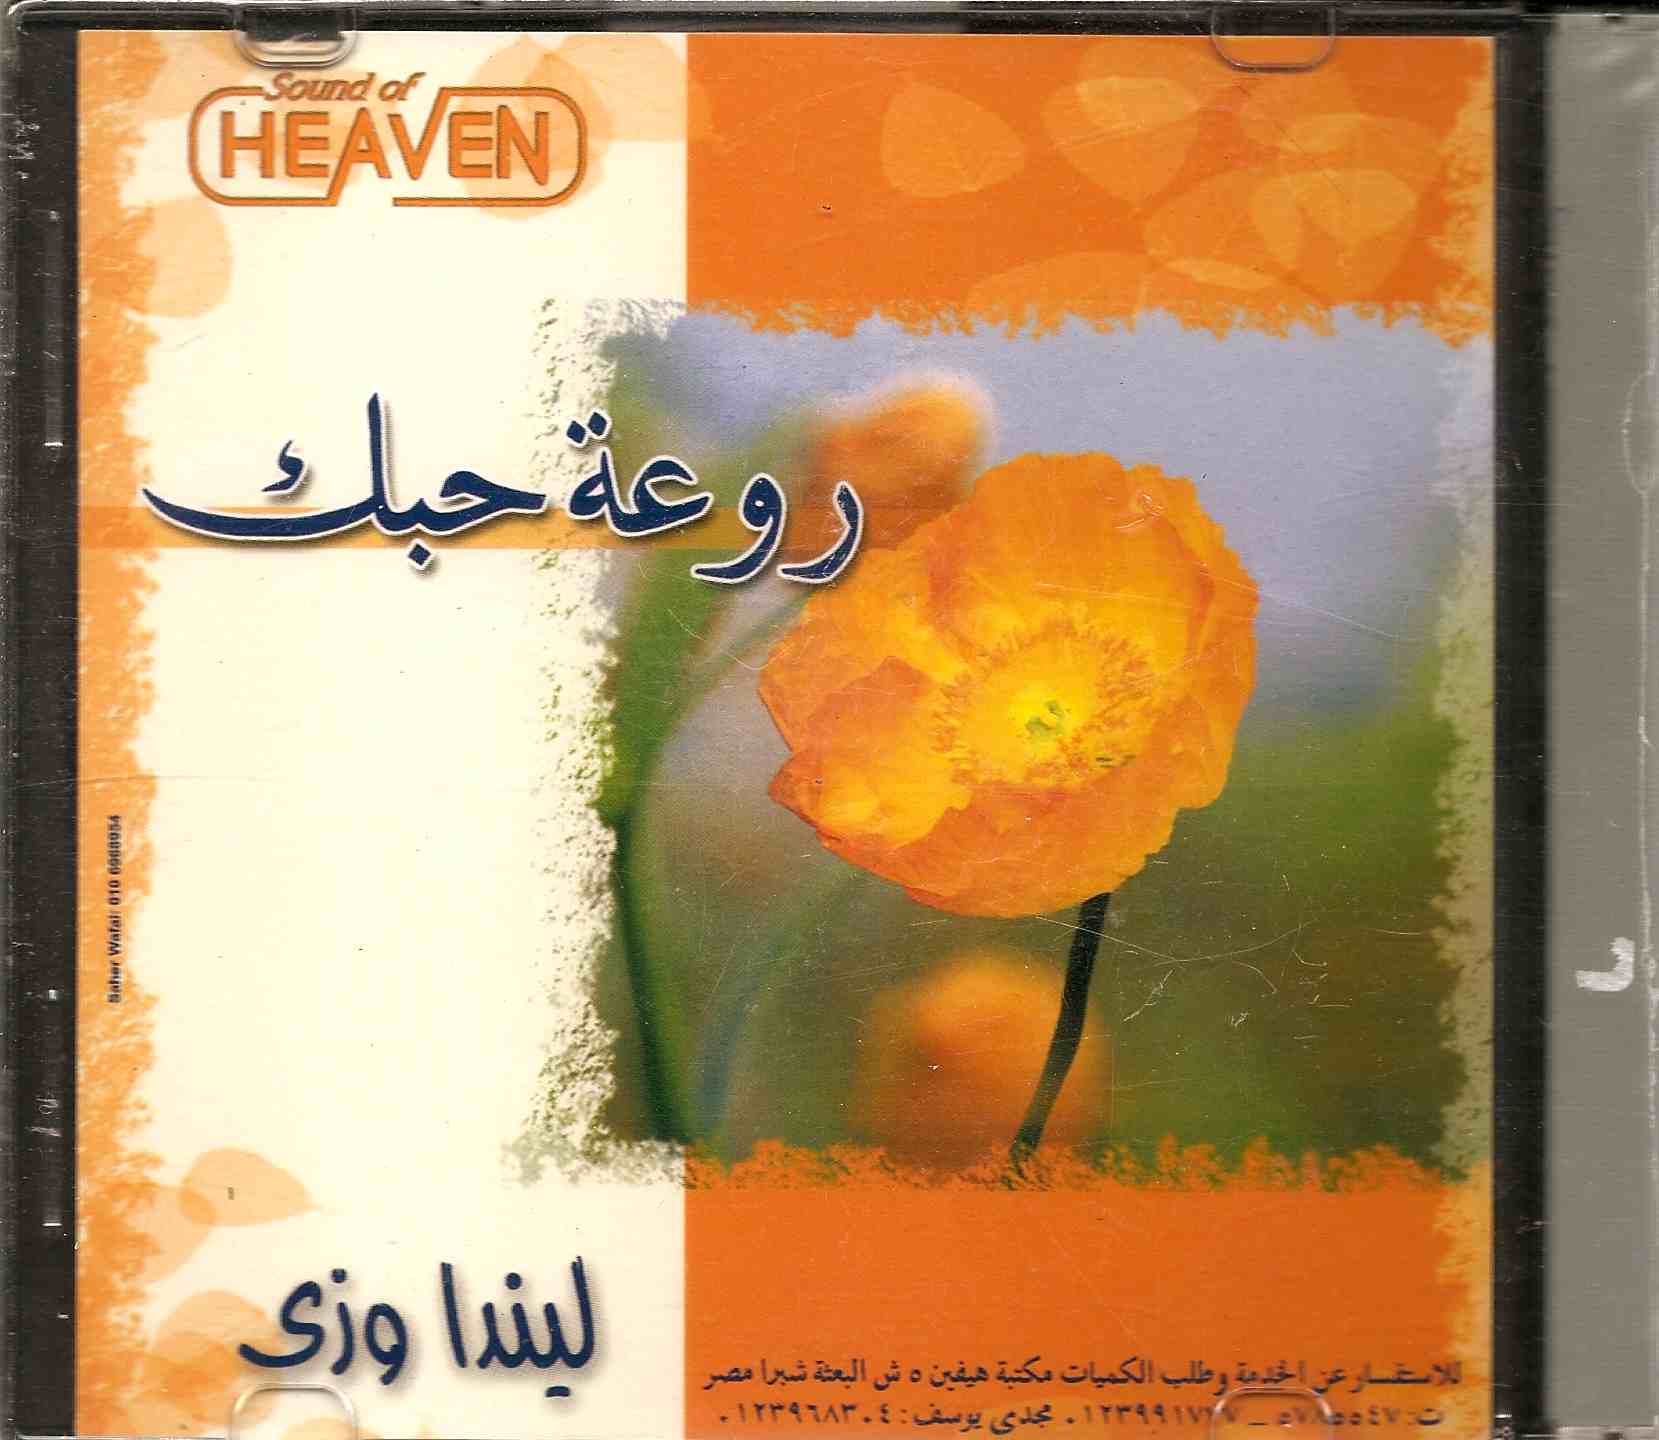 Sound of Heaven Arabic music CD "Roaa Hobak"